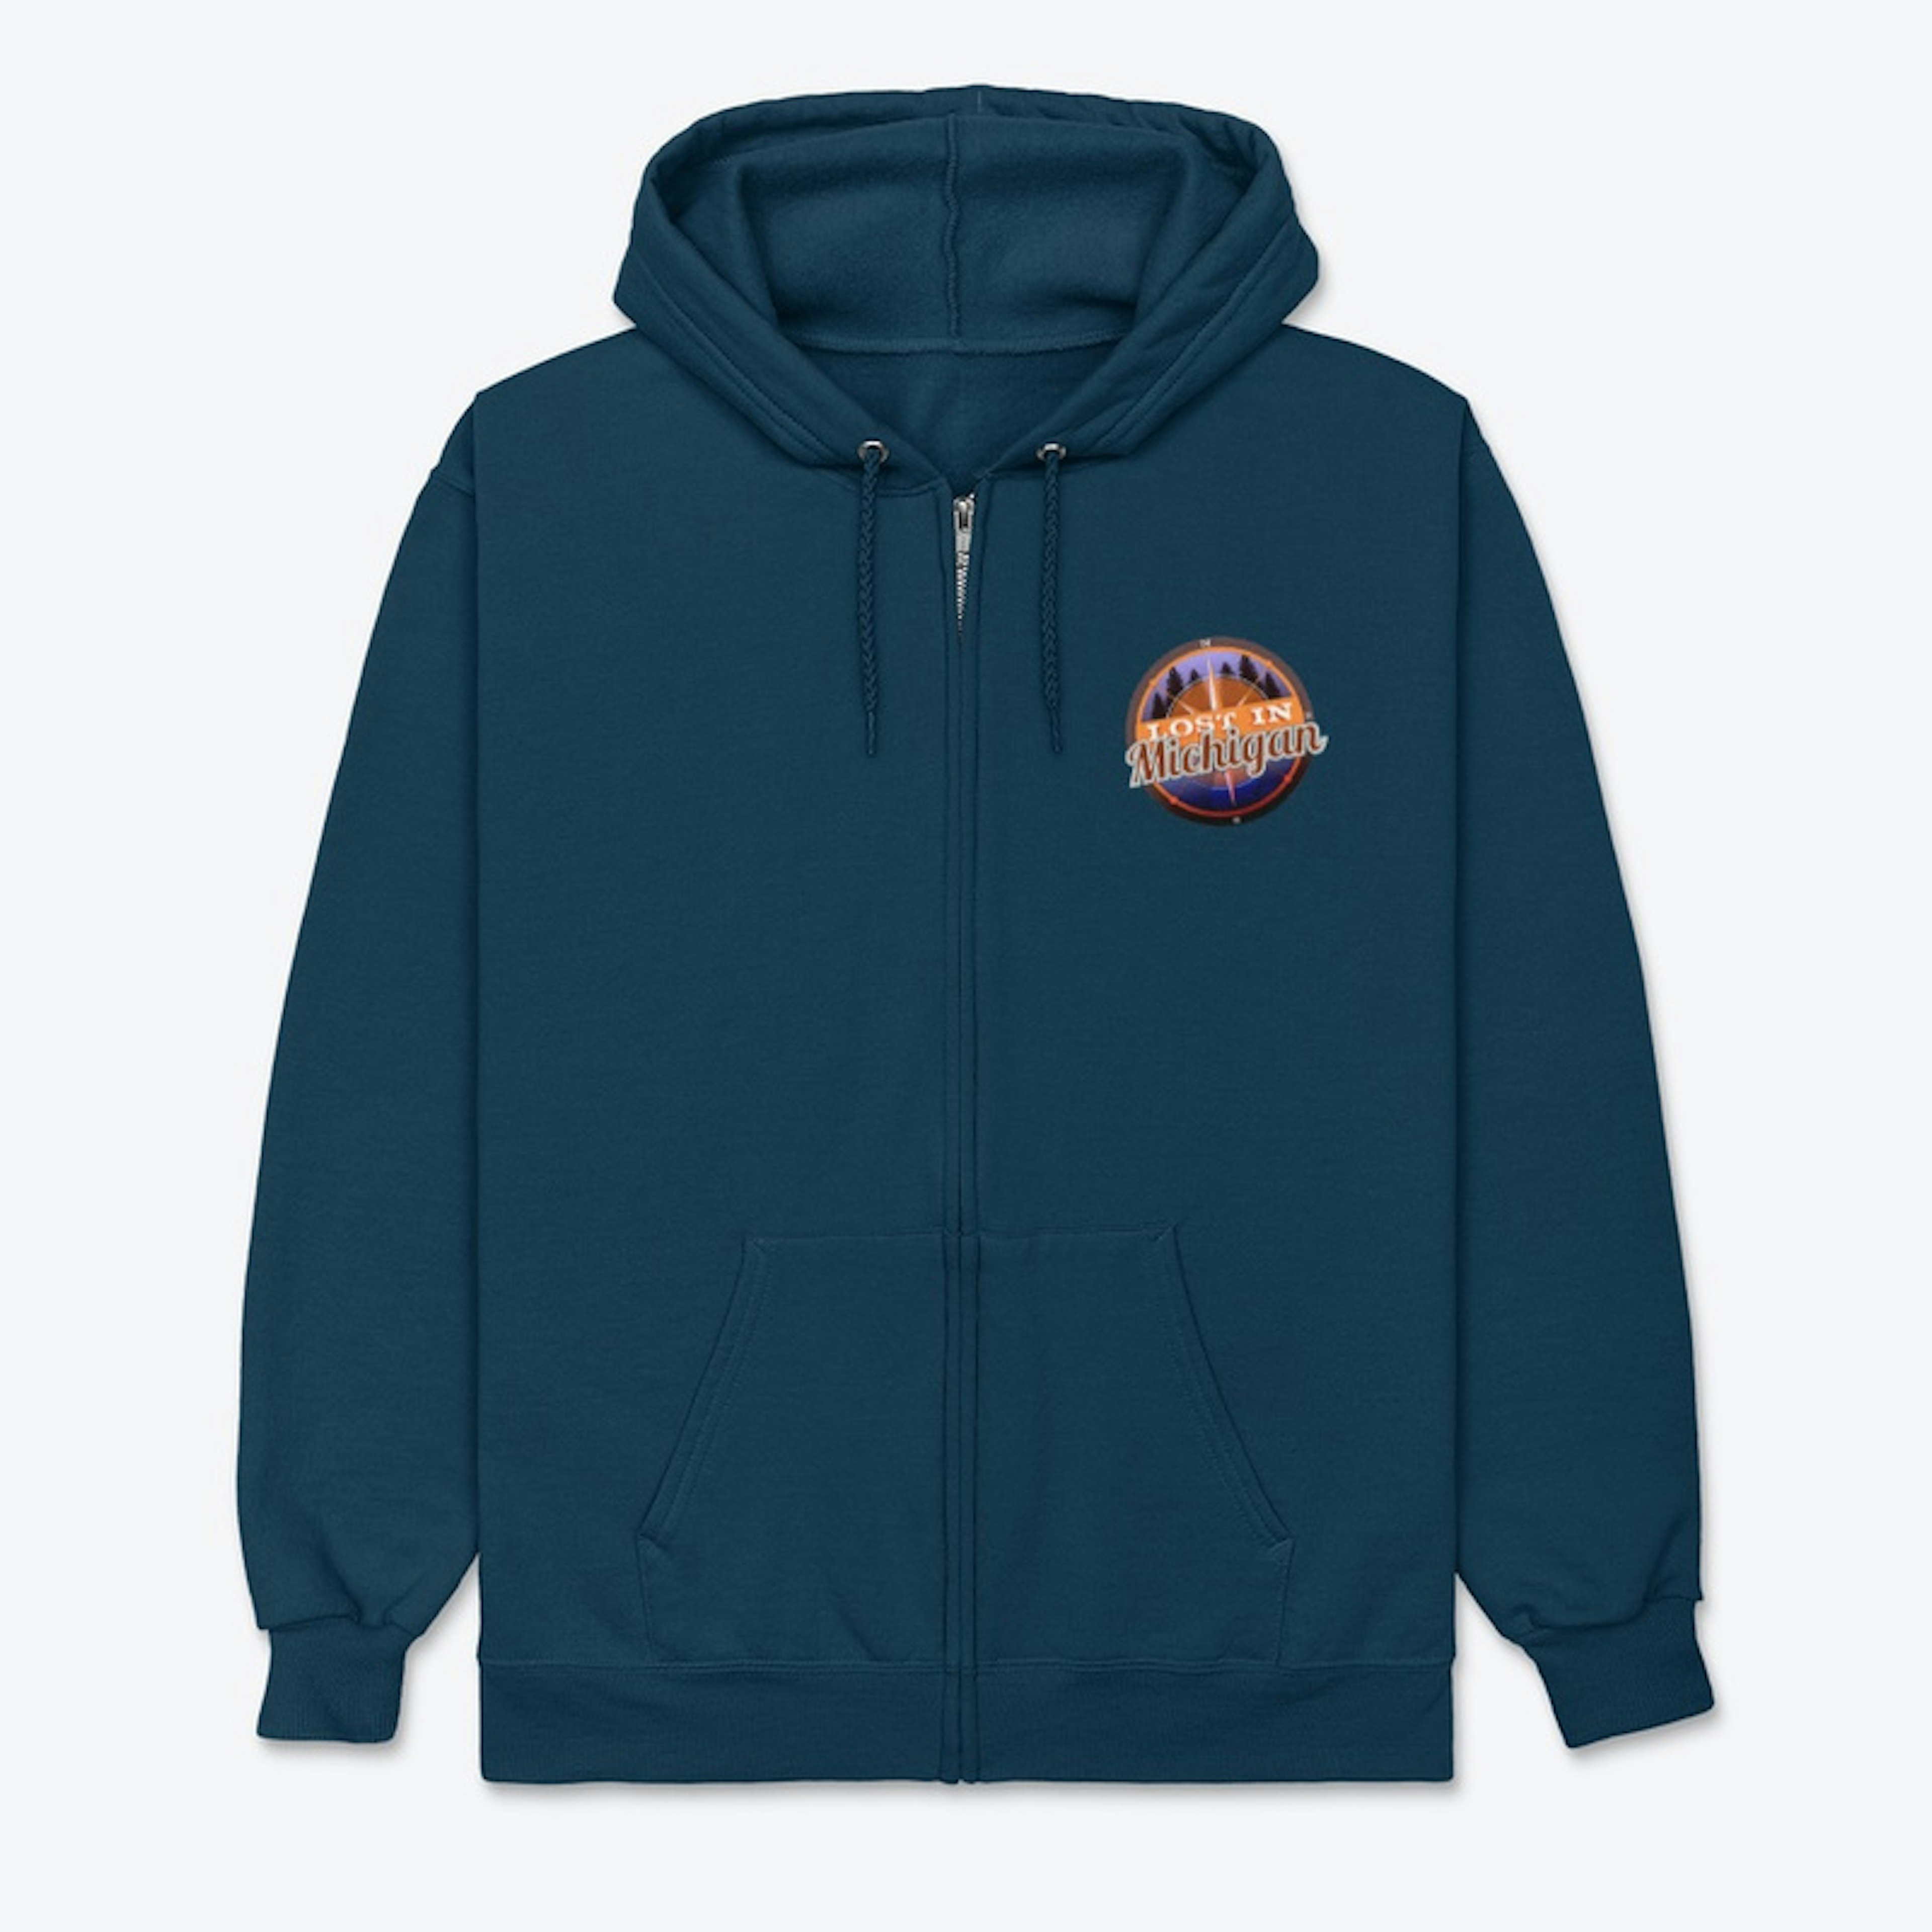 Lost In Michigan zip up hoodie